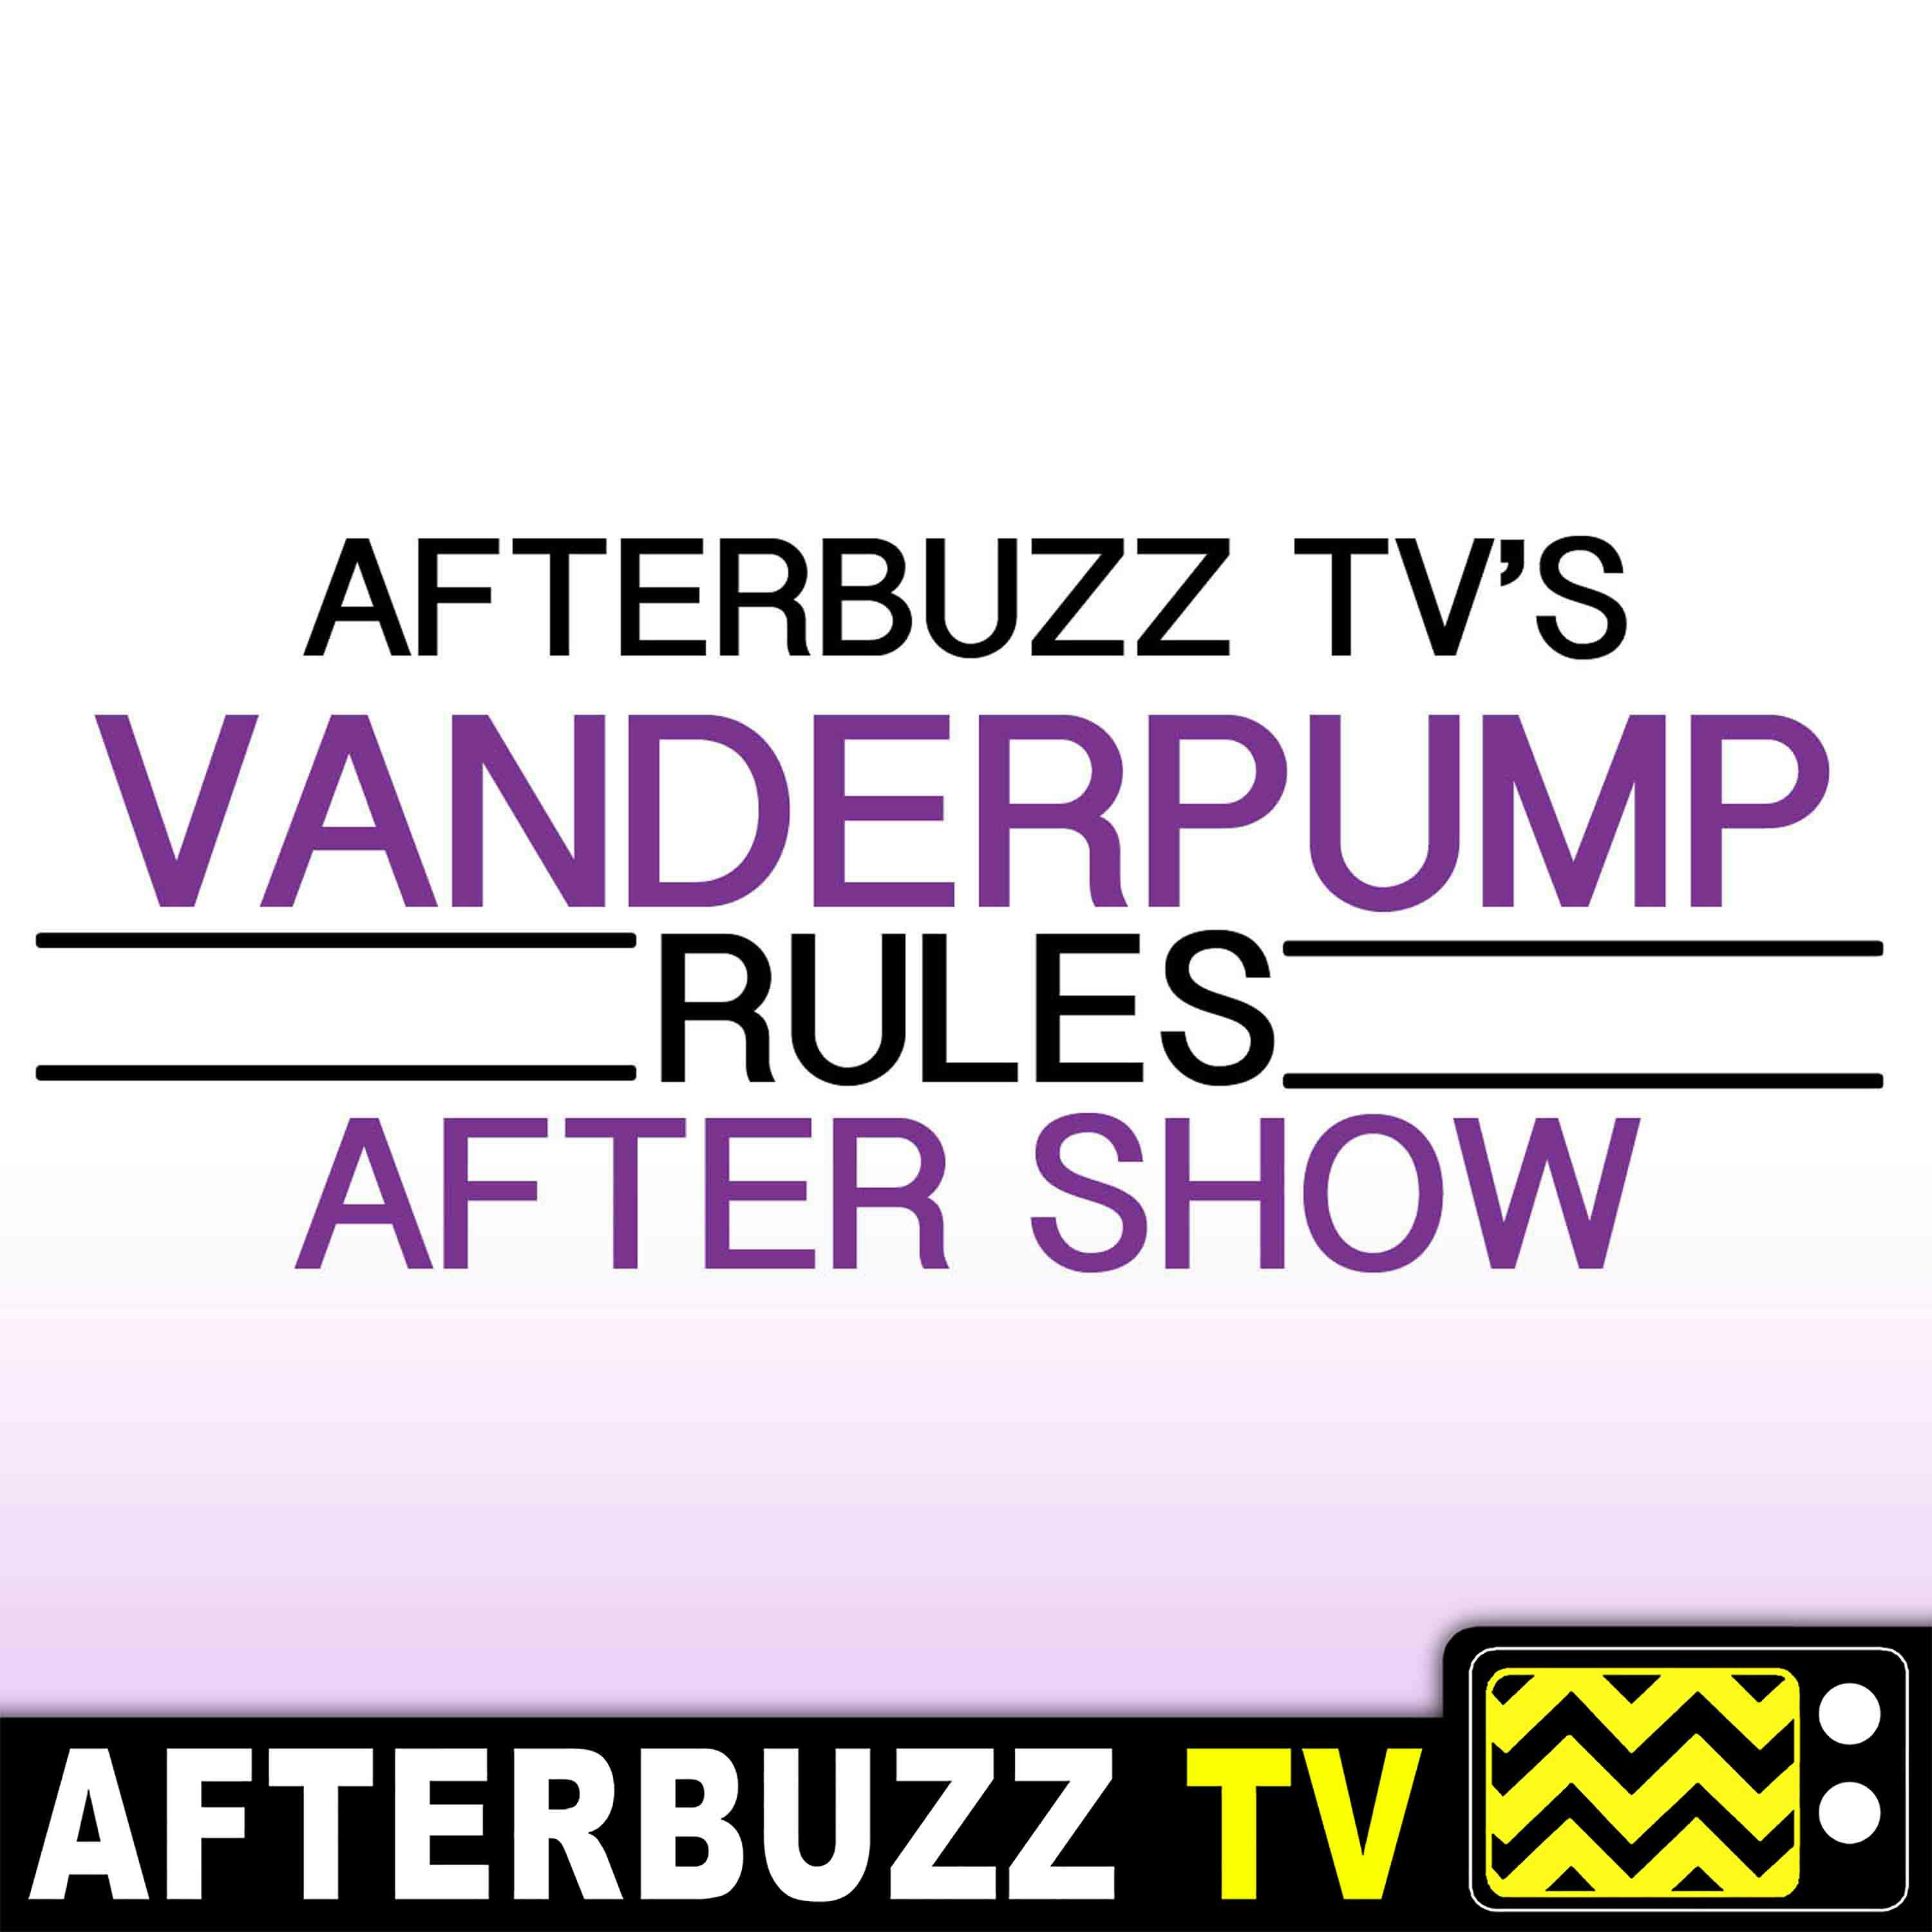 "Rules of Engagement" Season 7 Episode 21 'Vanderpump Rules' Review